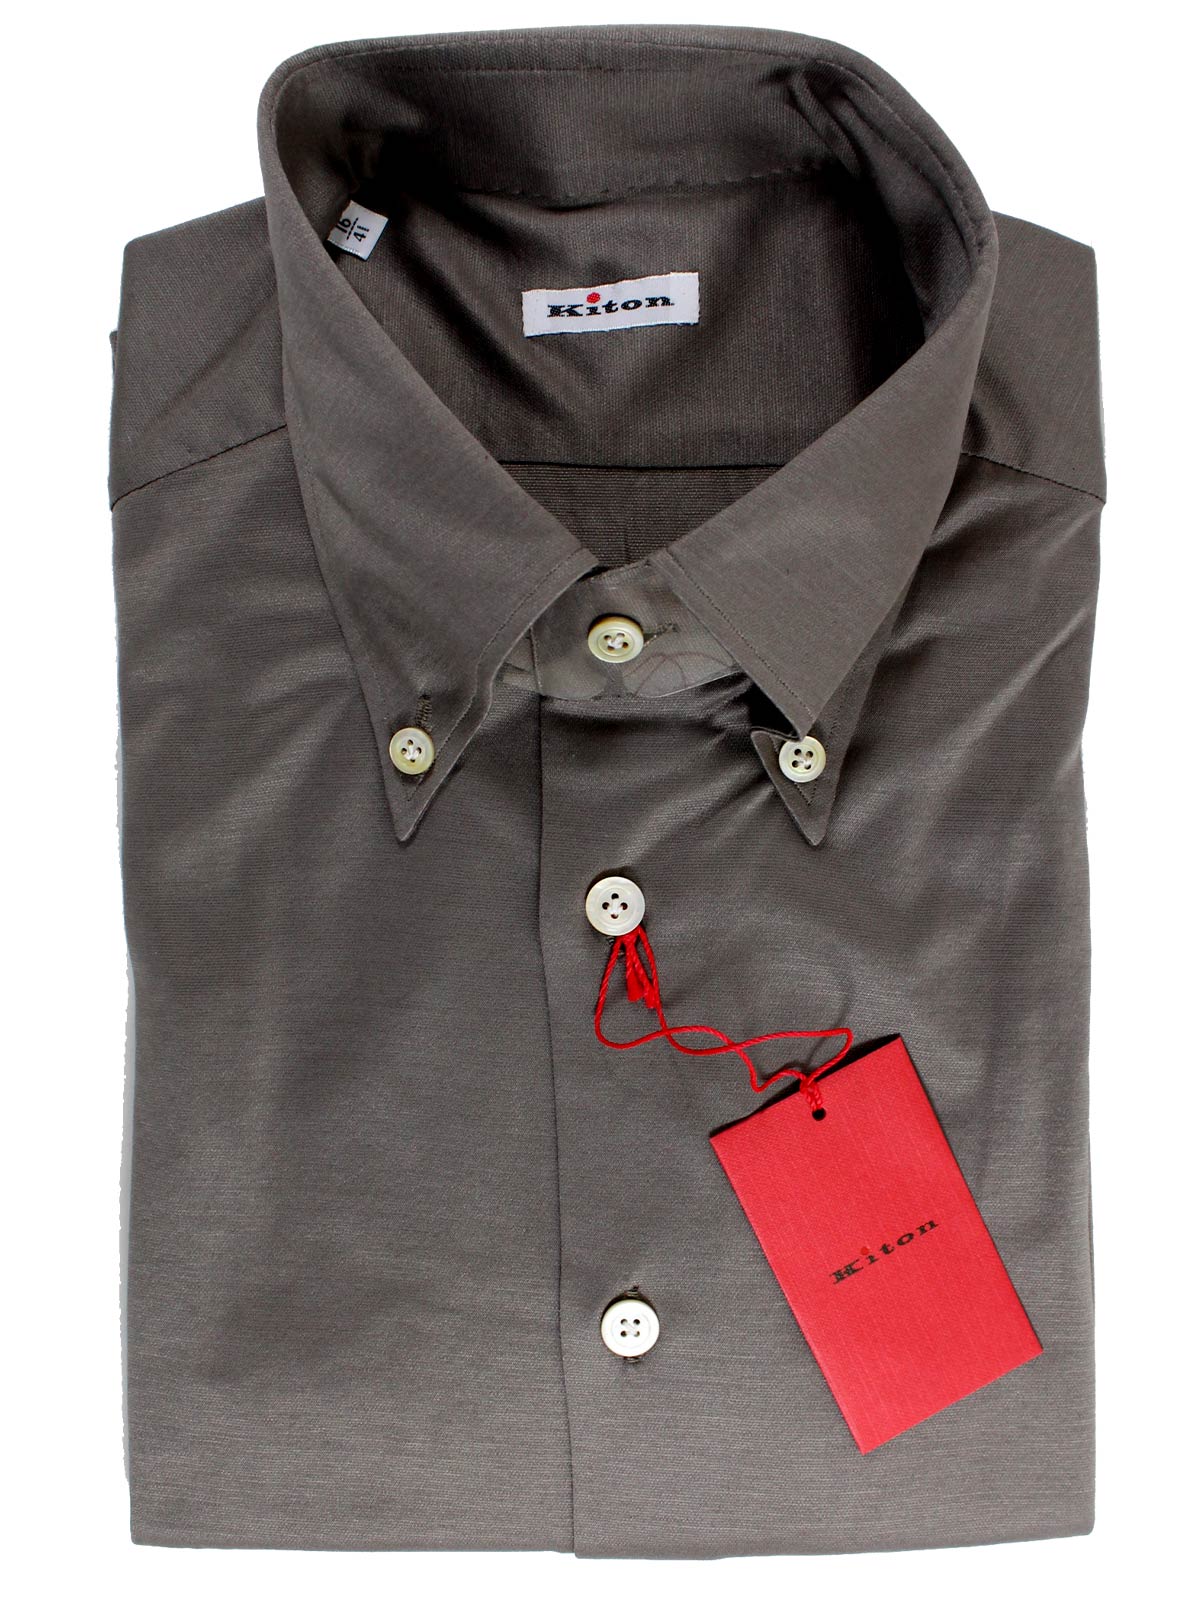 Kiton Shirt Taupe-Gray Button Down Collar Shirt 38 - 15 REDUCED -SALE